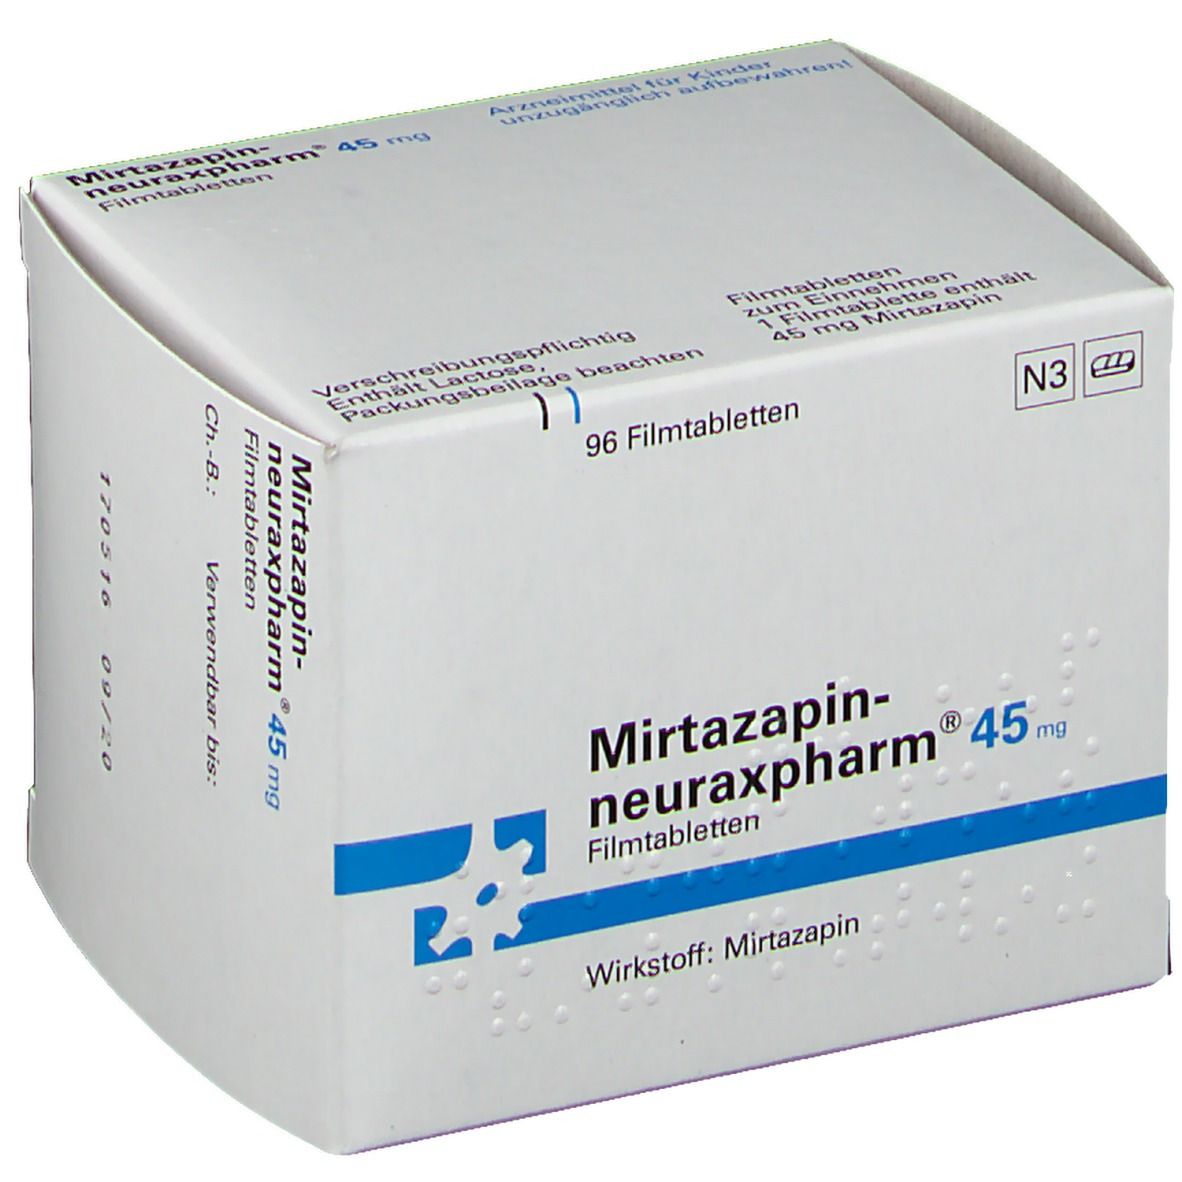 MIRTAZAPIN neuraxpharm 45 mg Filmtabletten